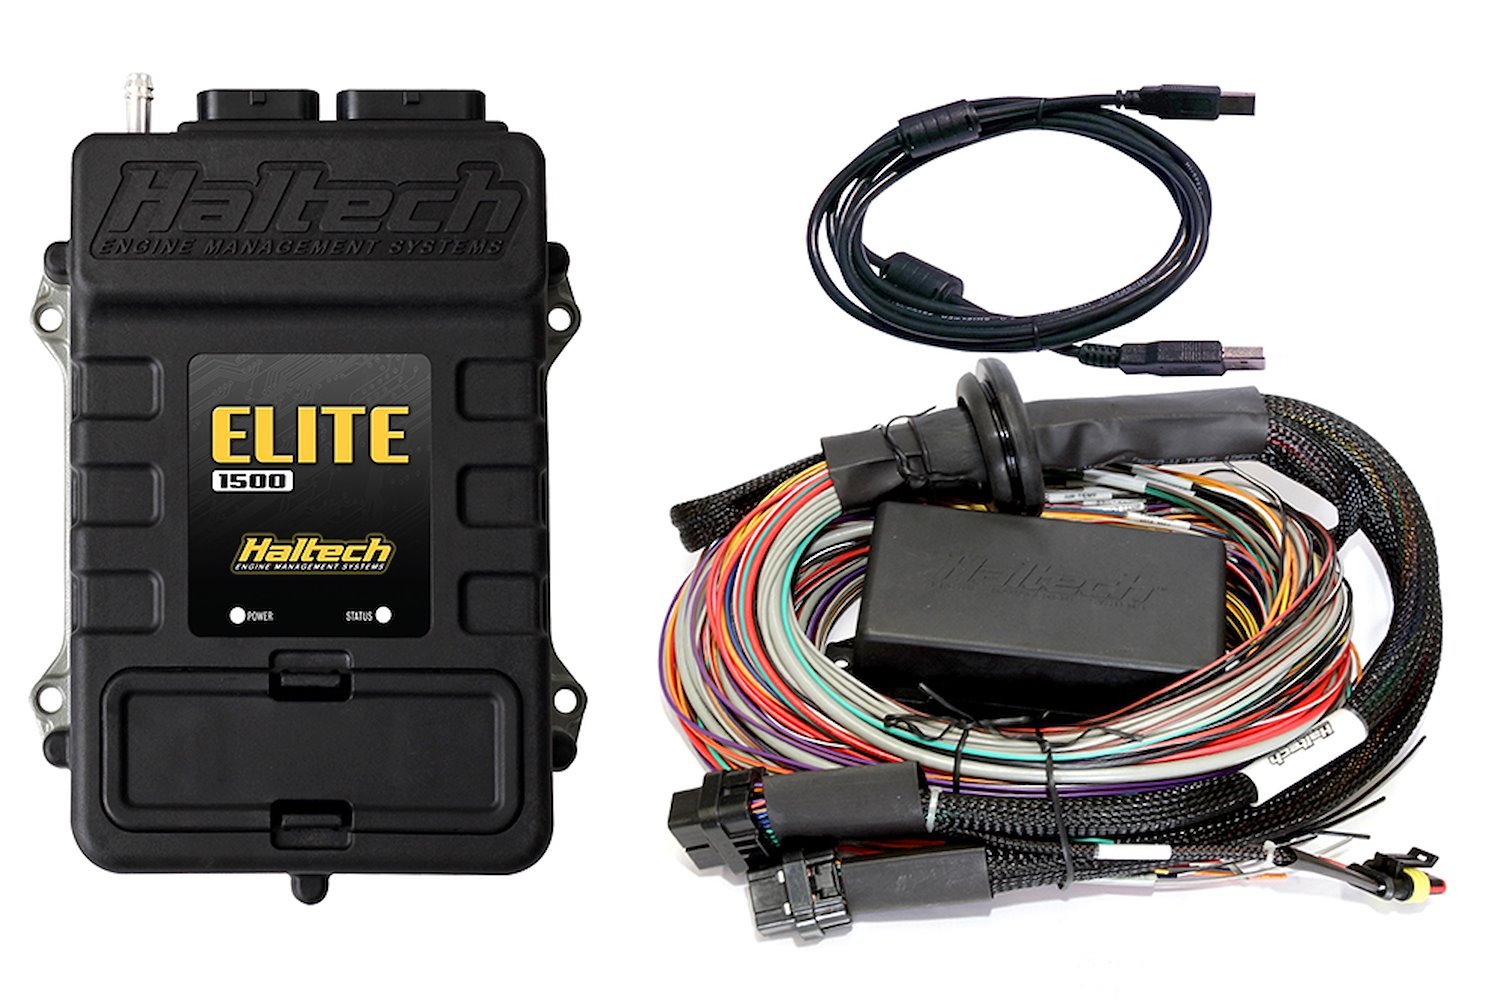 HT-150904 Elite 1500 + Premium Universal Wire-in Harness Kit, 2.5m (8')